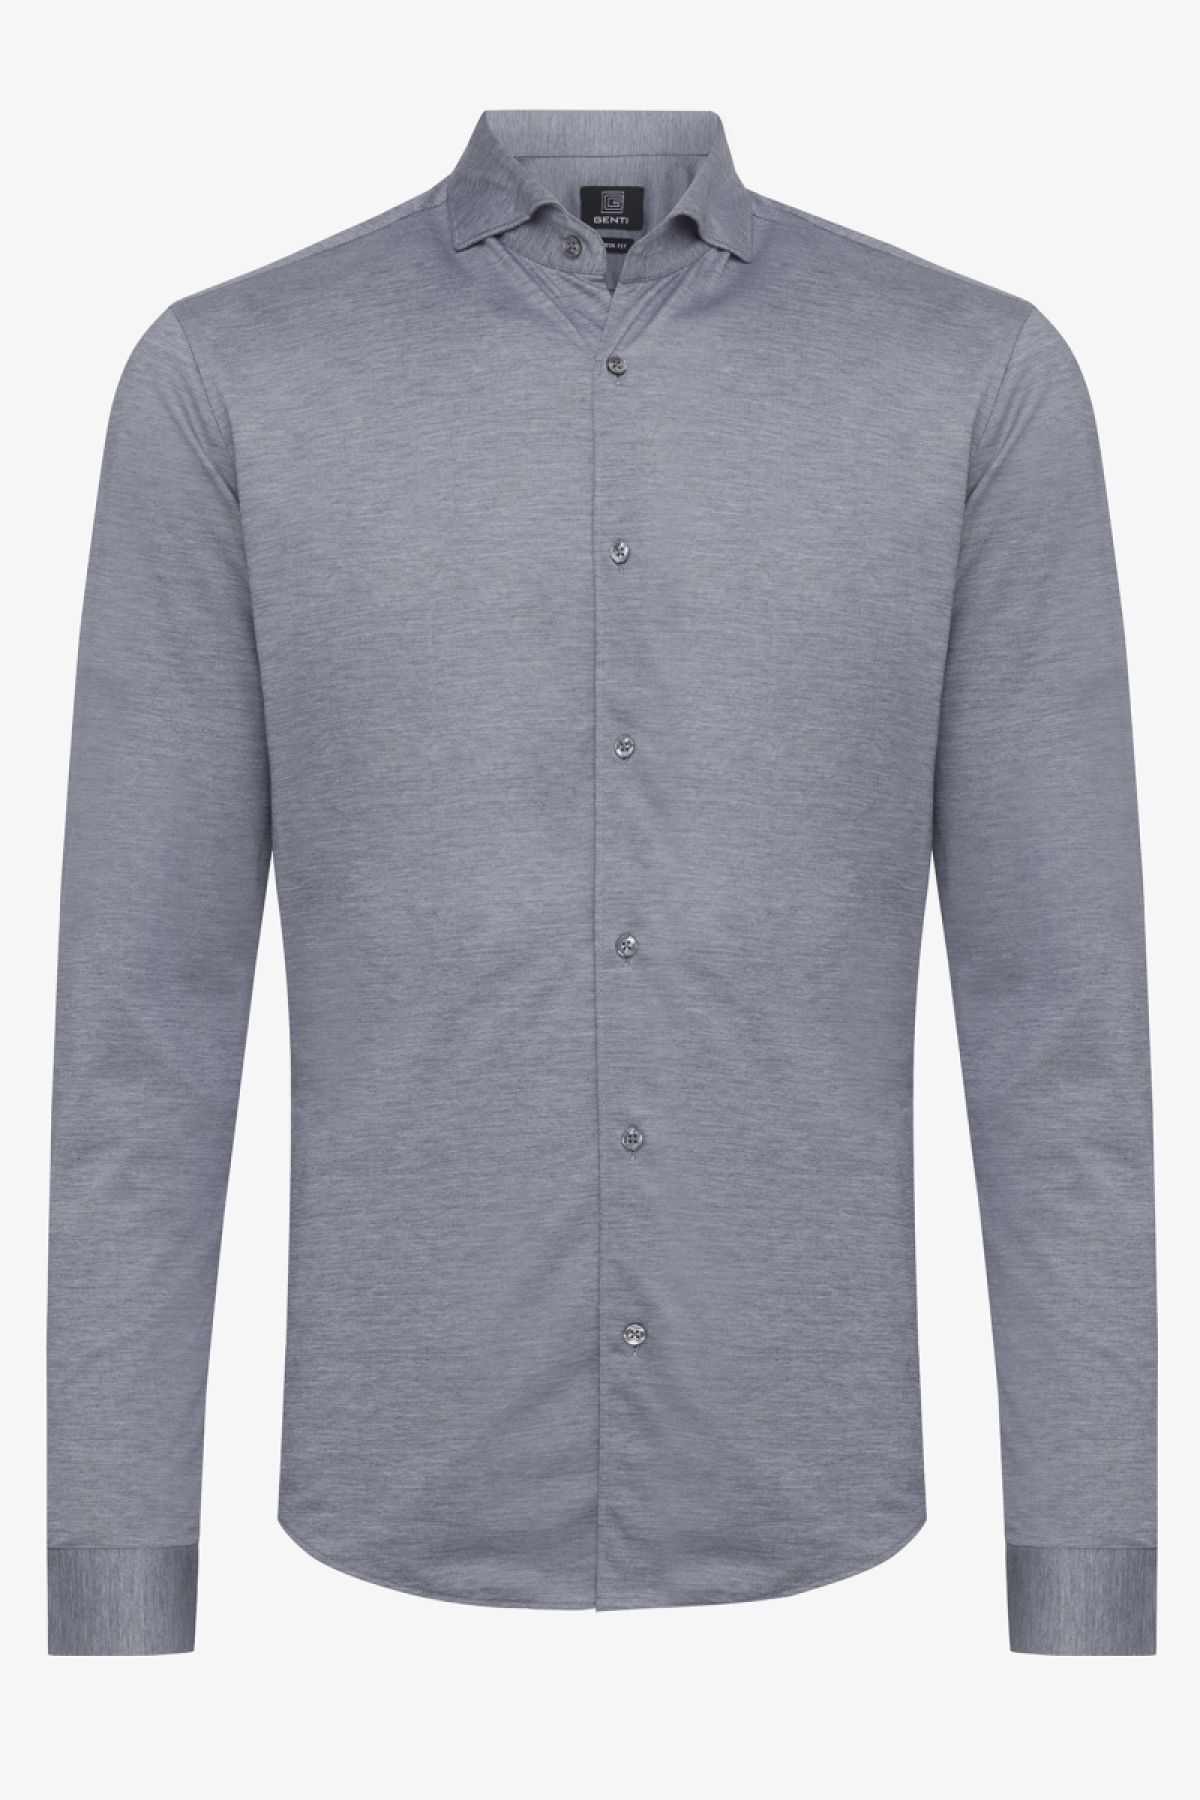 Jersey overhemd grijs/blauw